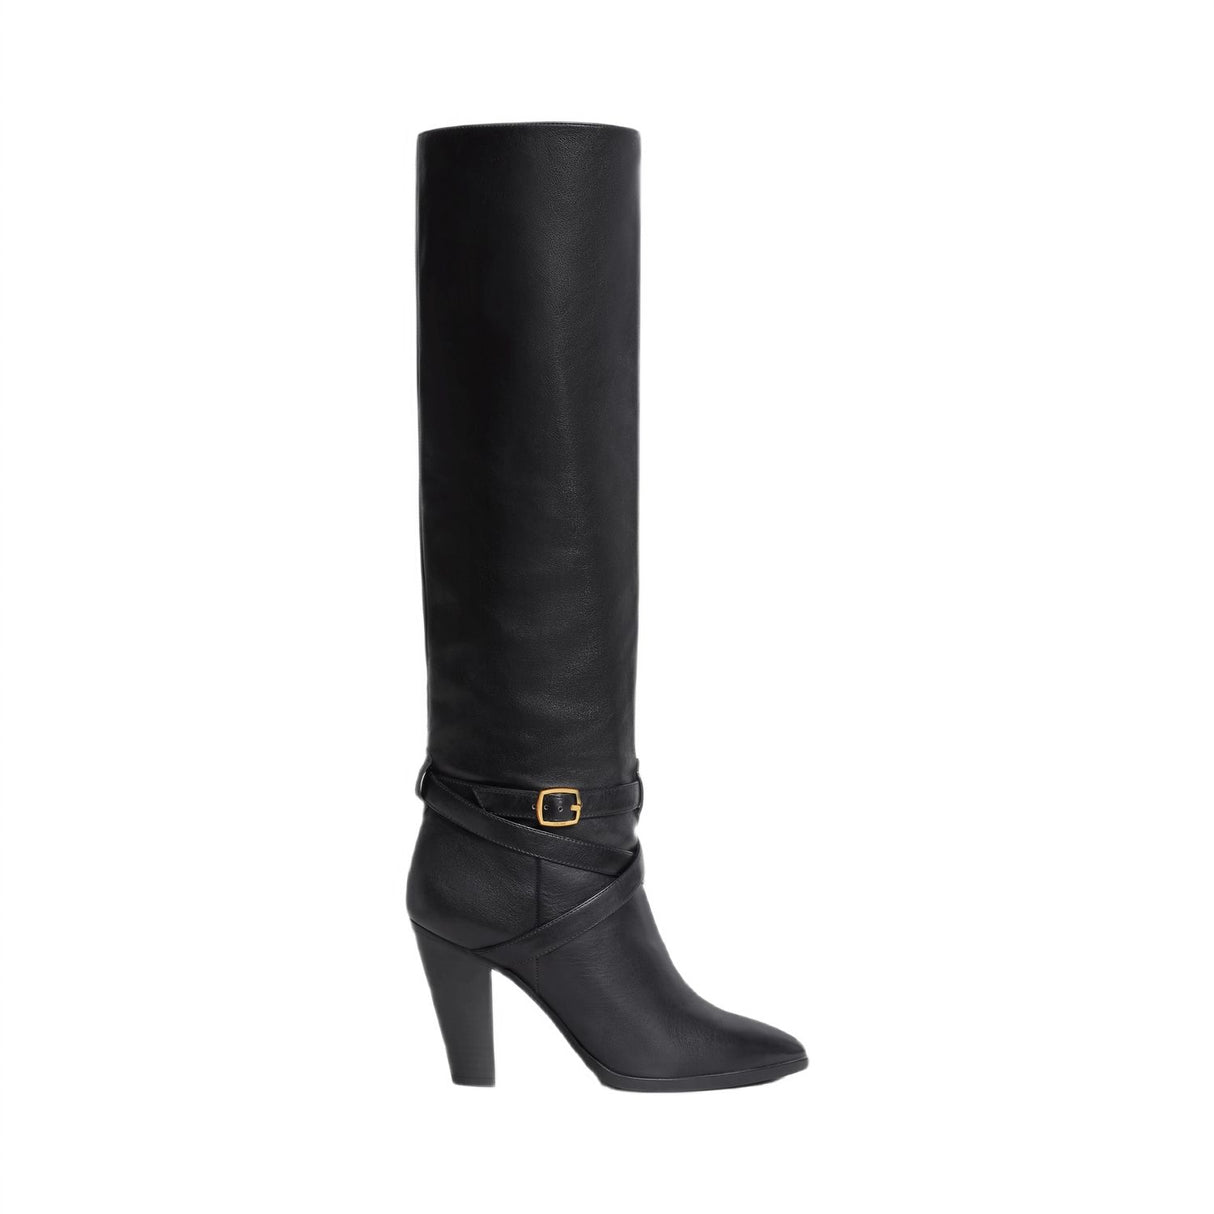 CELINE Wiltern Boots in Soft Black Calfskin with Straps Detailing - Women's